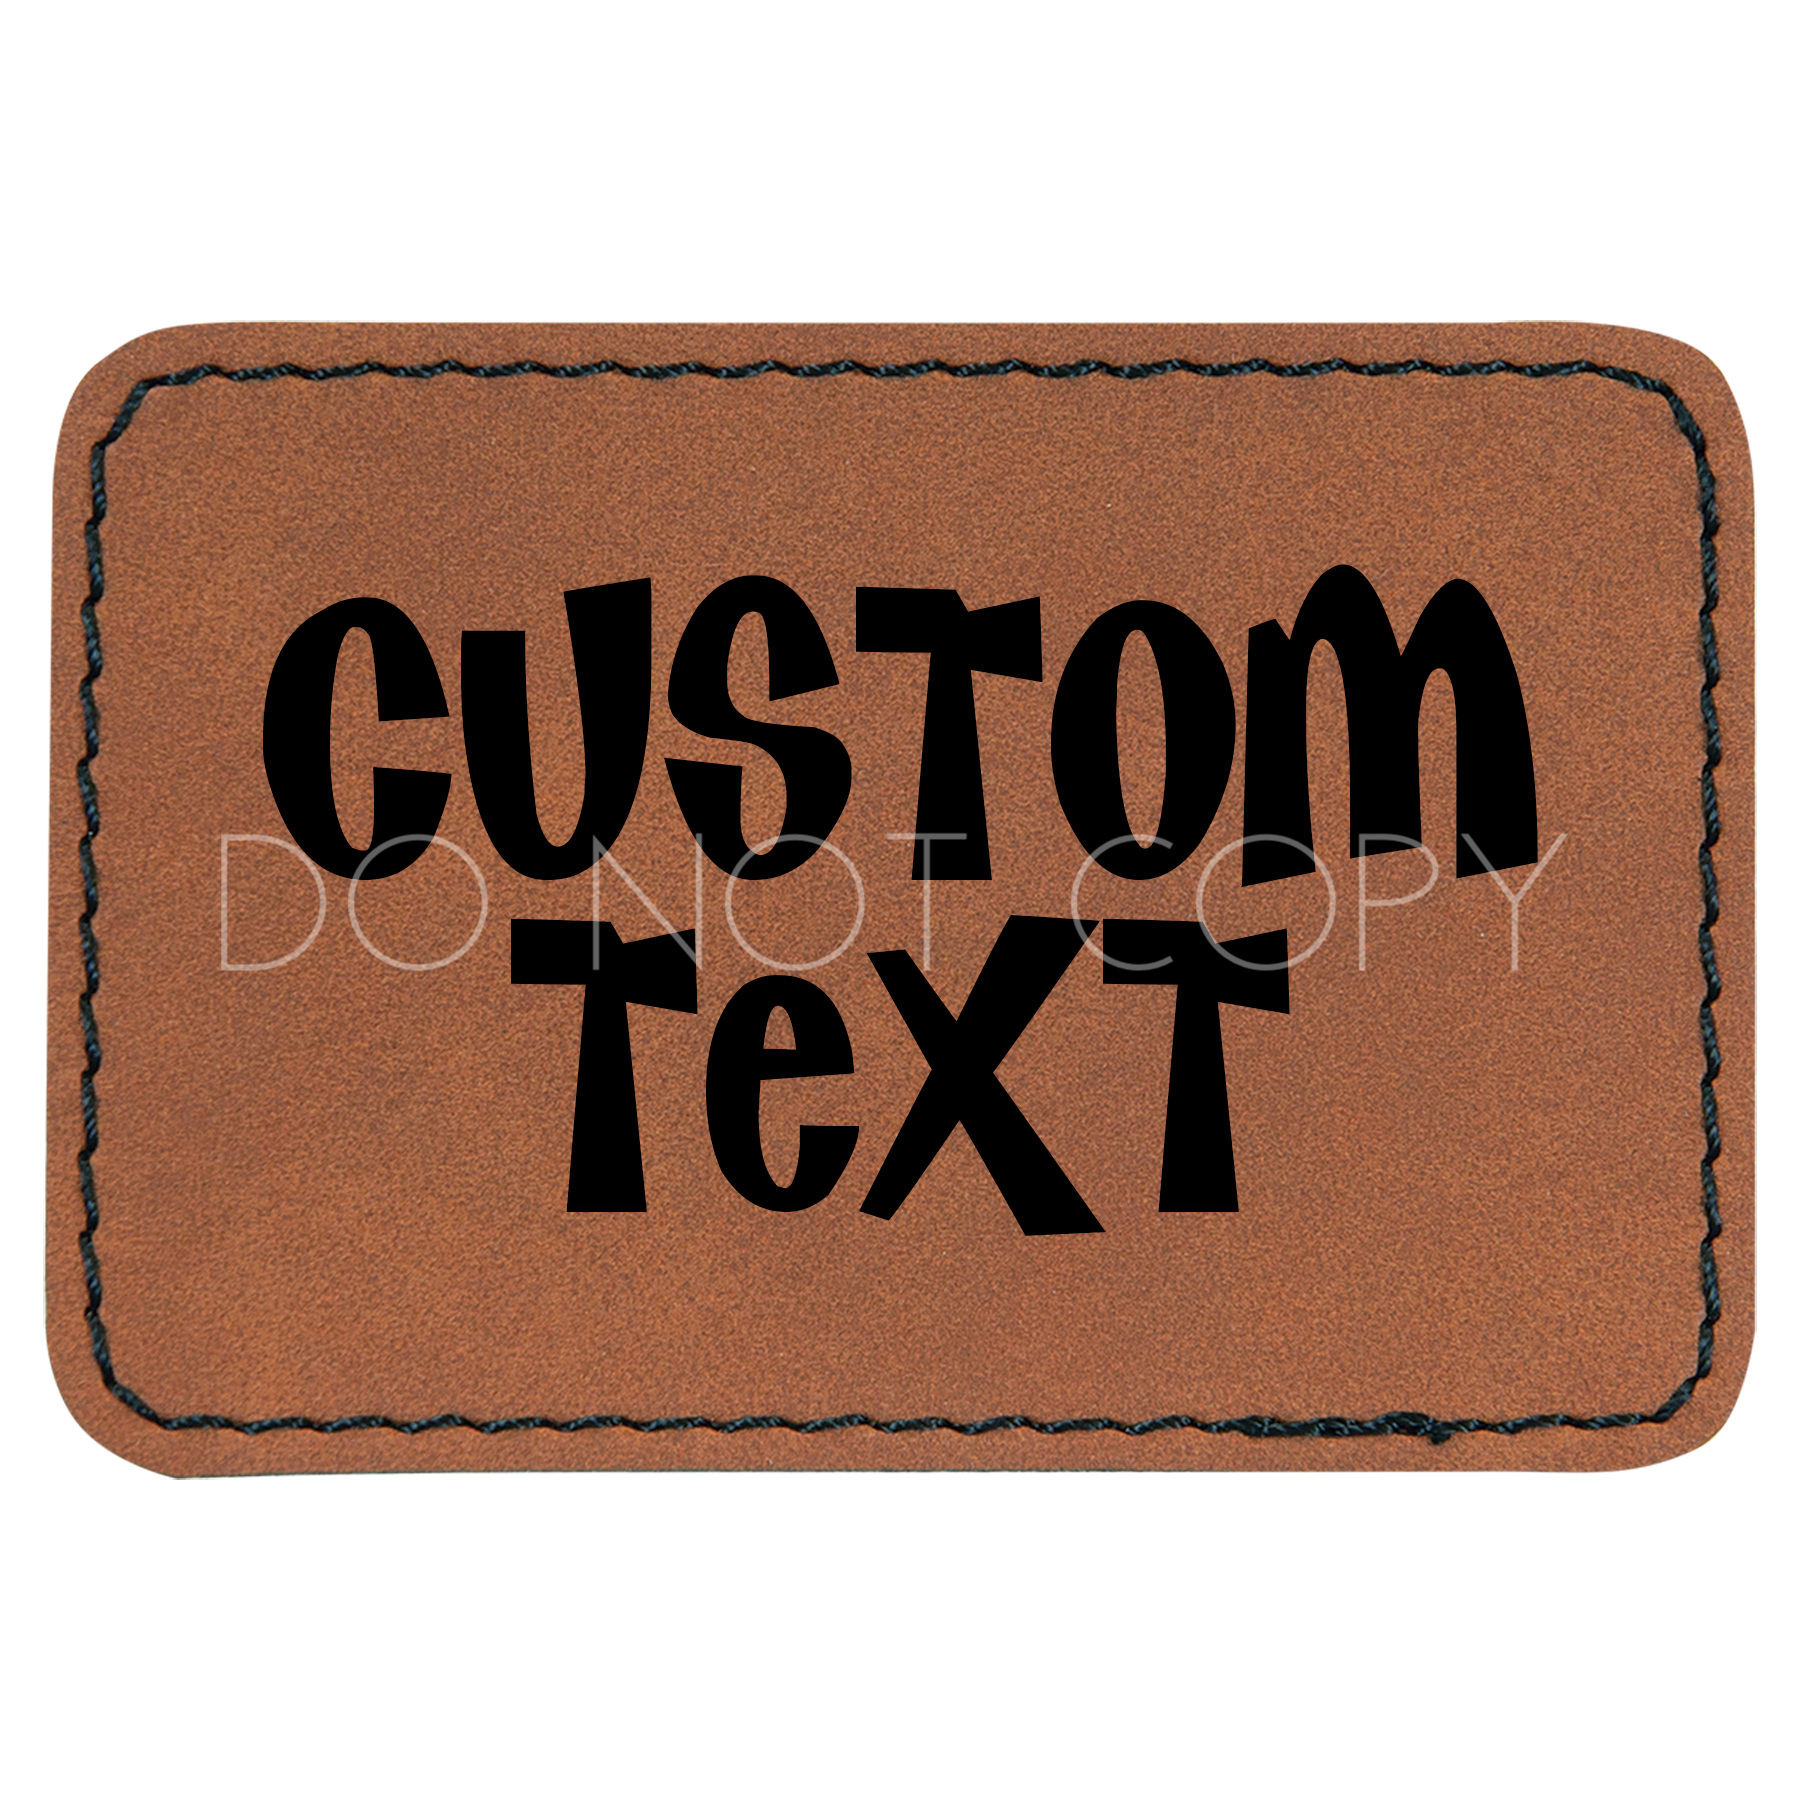 Bratty Inspired Custom Text Patch